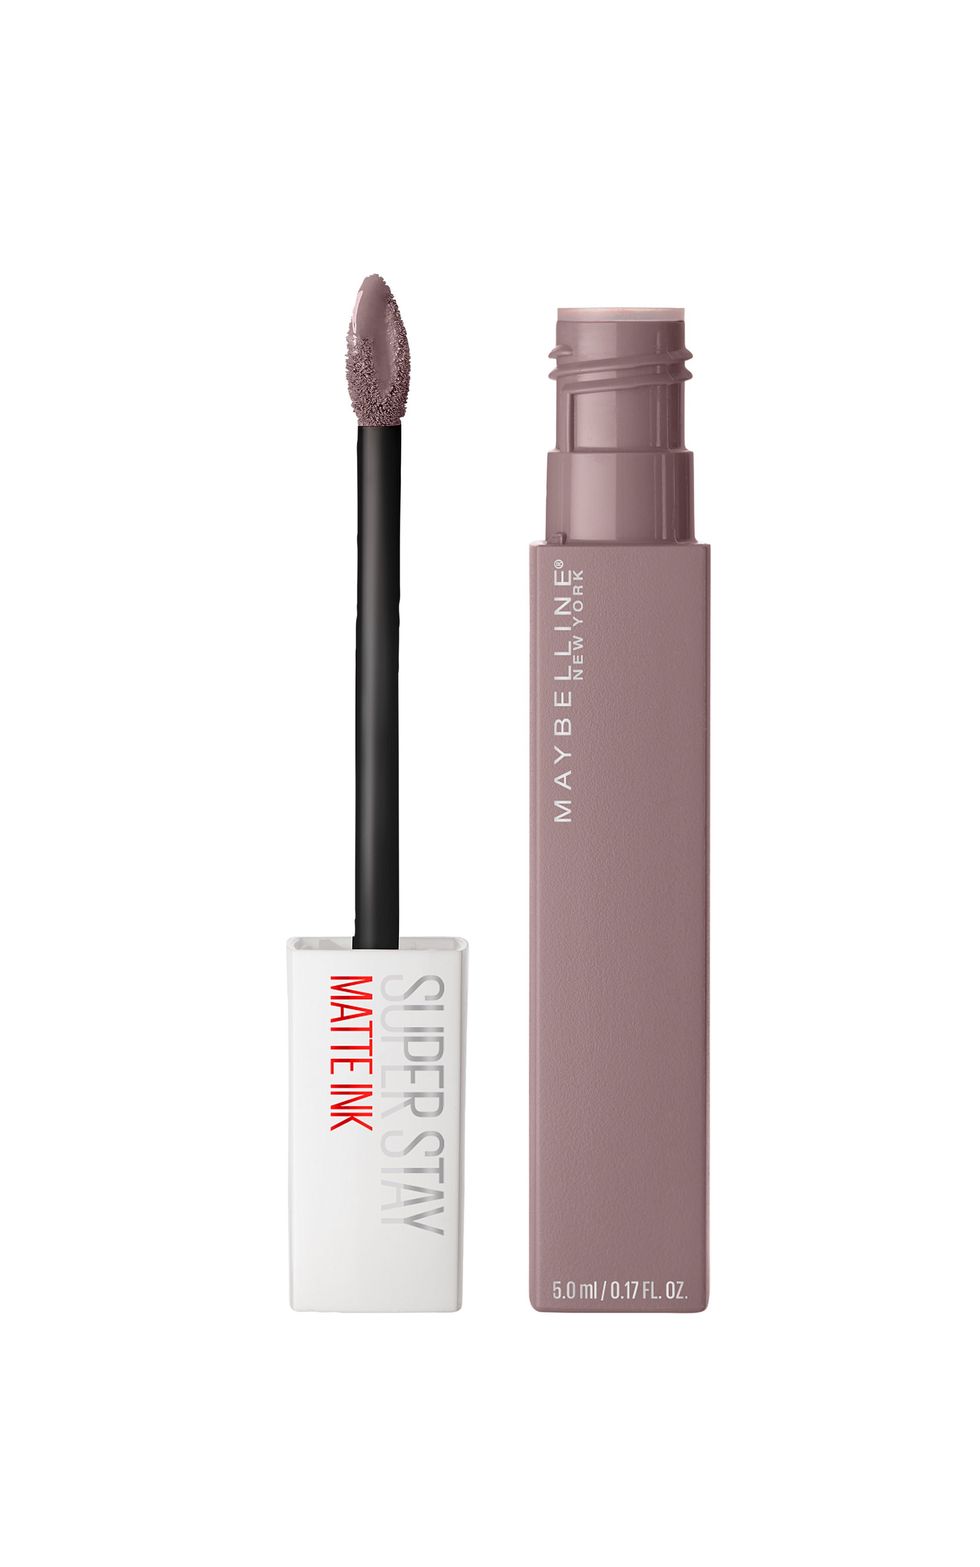 Maybelline SuperStay Matte Ink Un-Nude Liquid Lipstick in Huntress